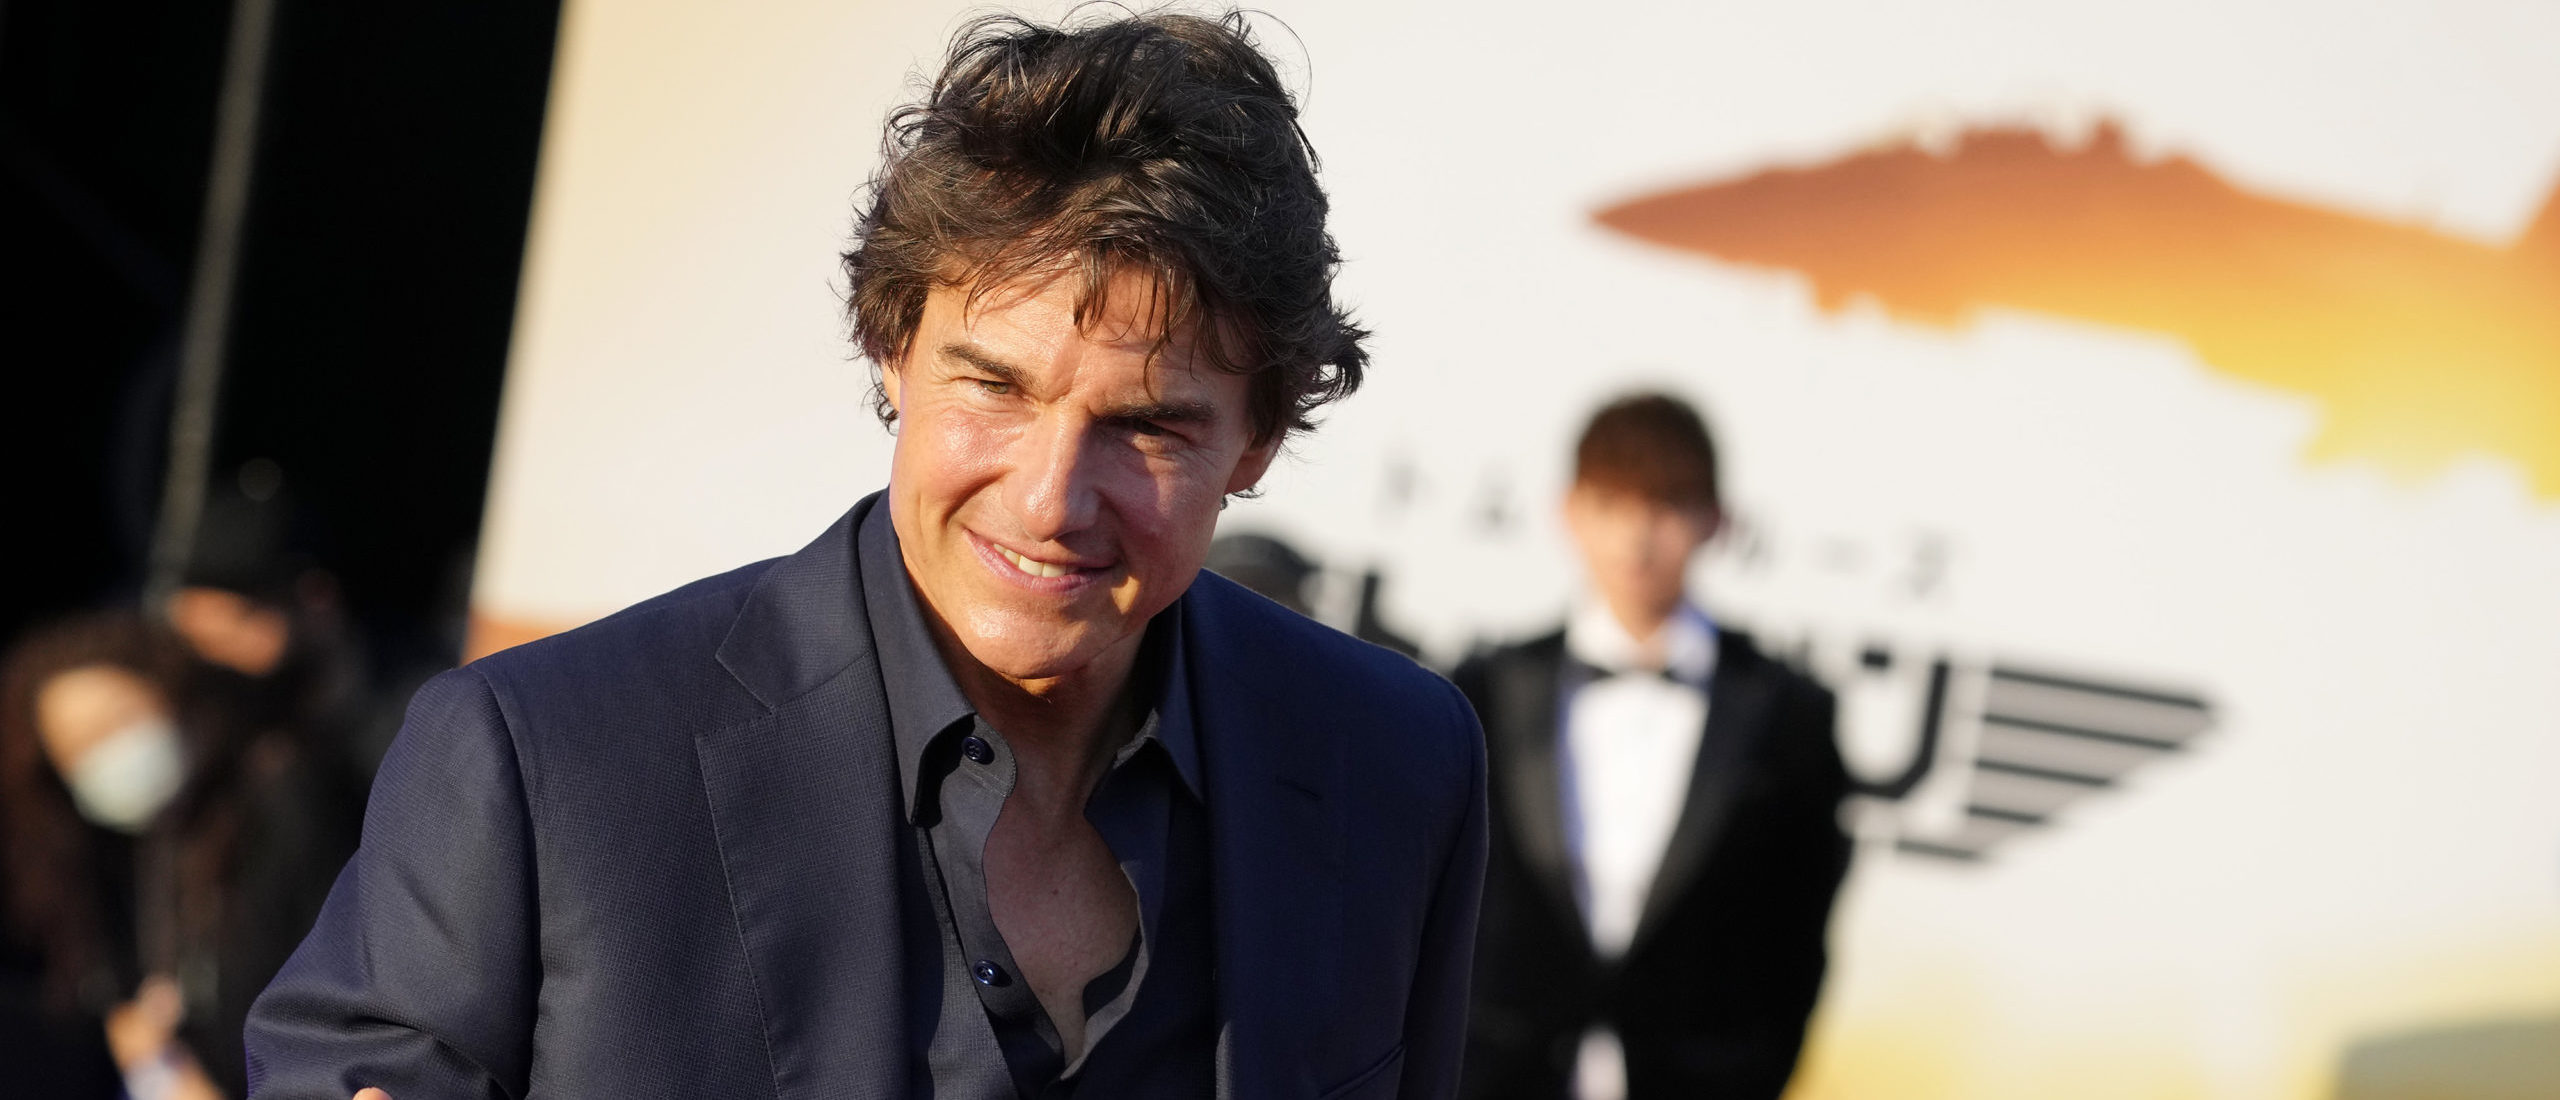 Actor Tom Cruise attends the red carpet for the Japan Premiere of "Top Gun: Maverick" at Osanbashi Yokohama on May 24, 2022 in Yokohama, Kanagawa, Japan.